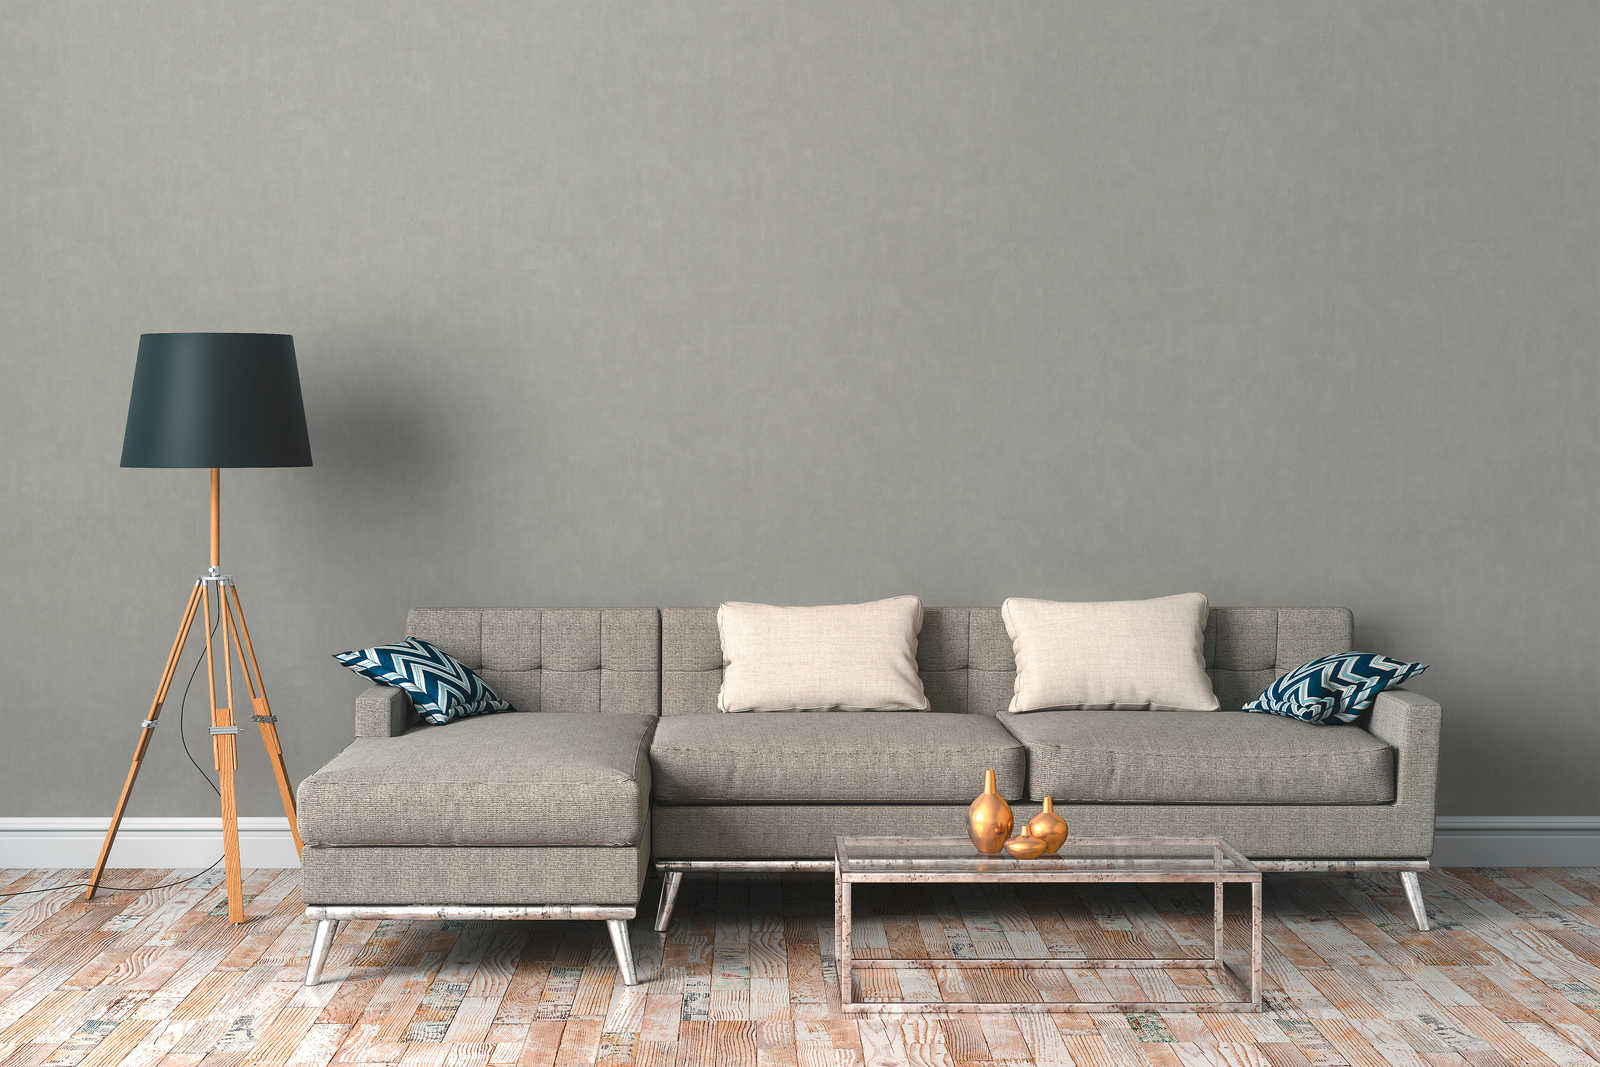             Wallpaper grey beige with plaster look in vintage style
        